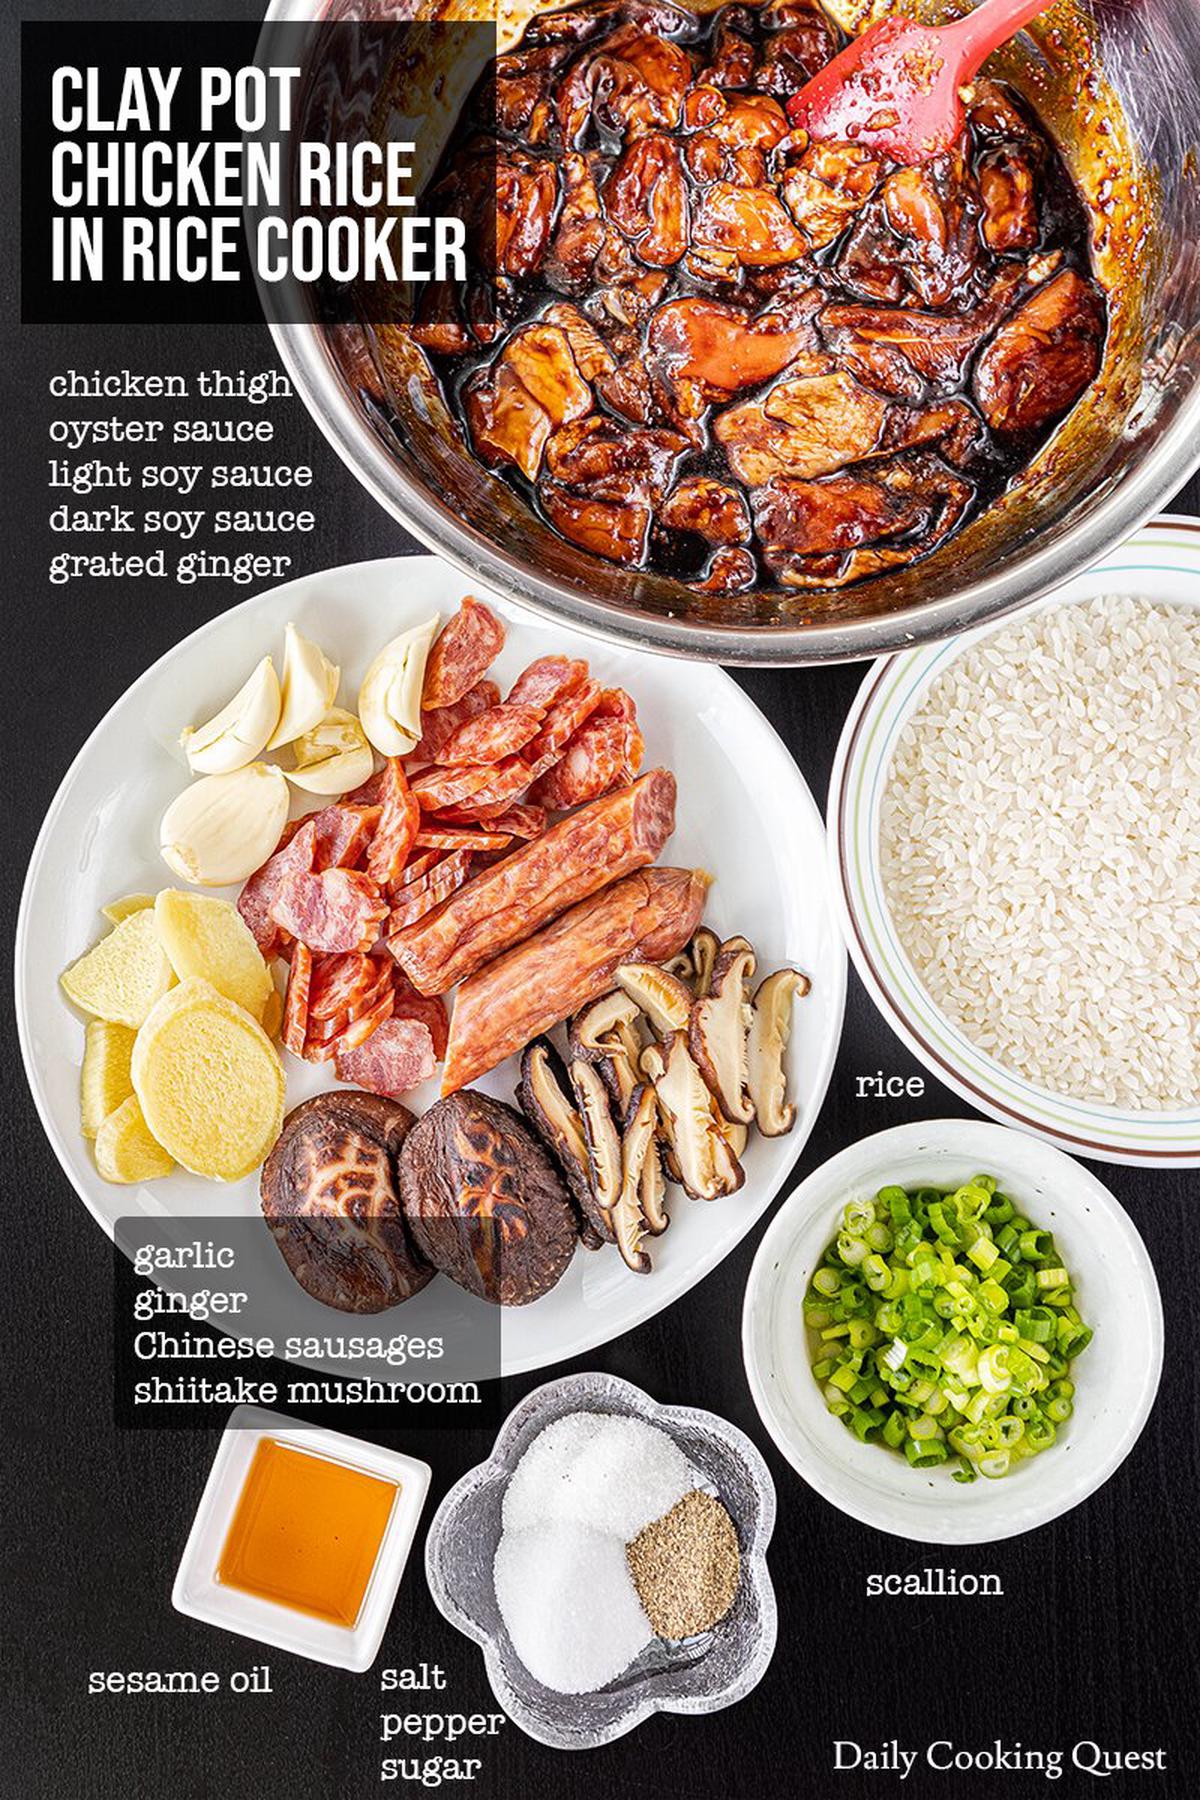 Ingredients to prepare clay pot chicken rice.